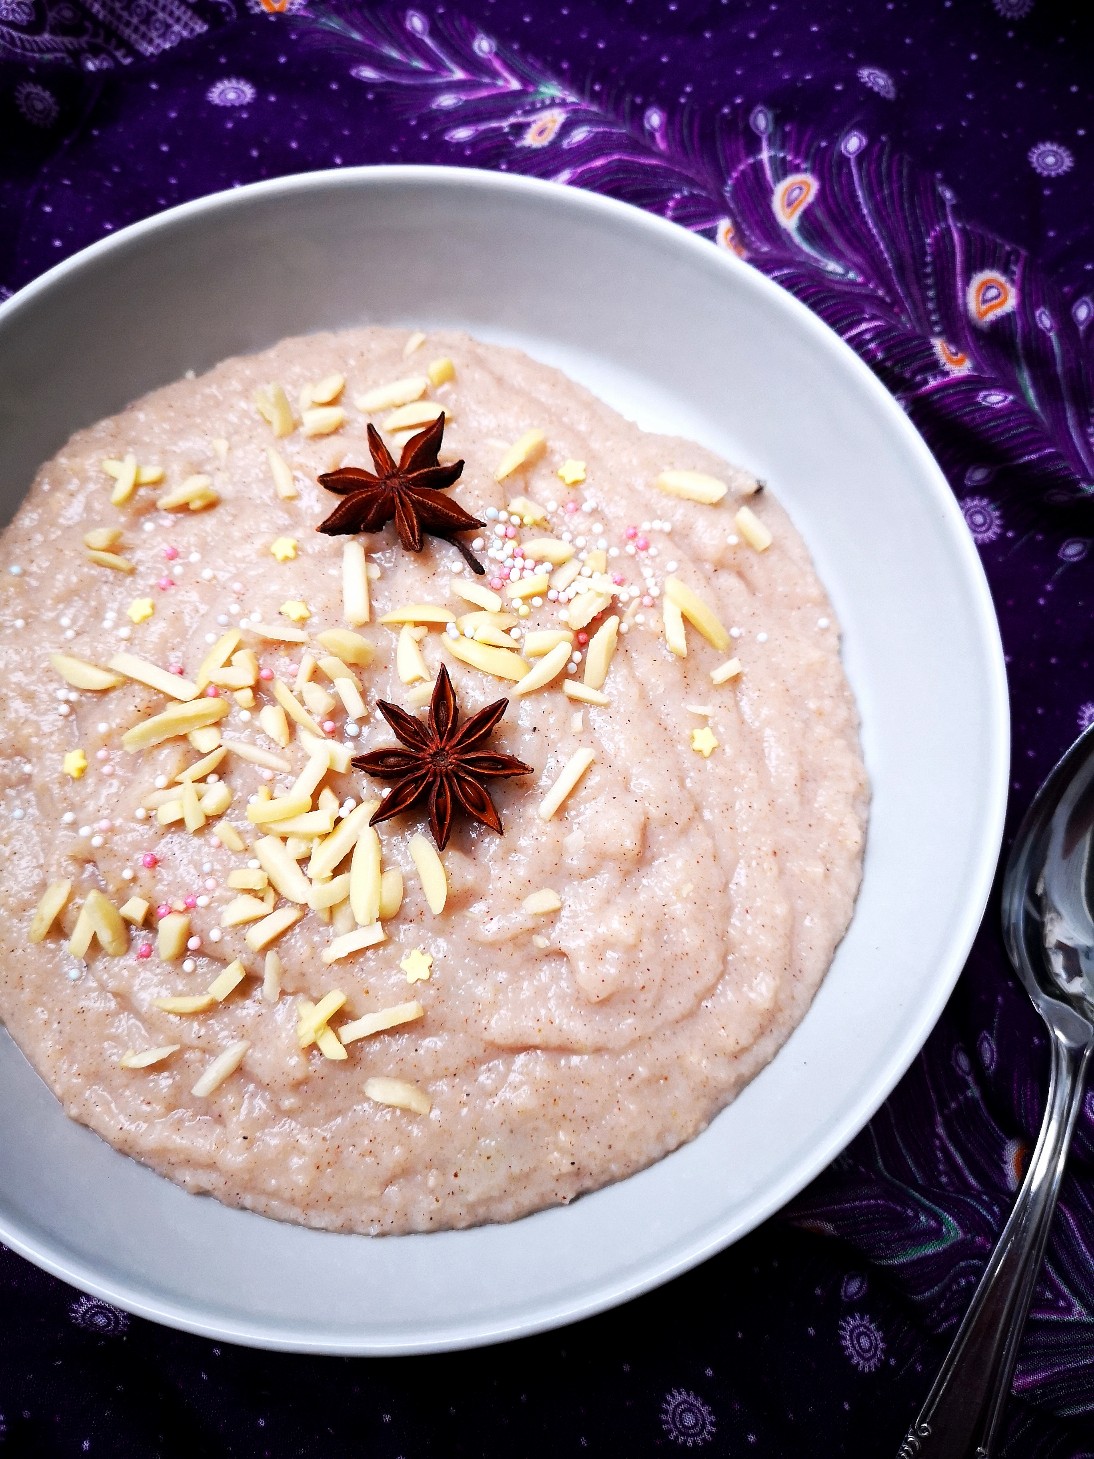 Rice porridge in a white bowl against a decorative purple background